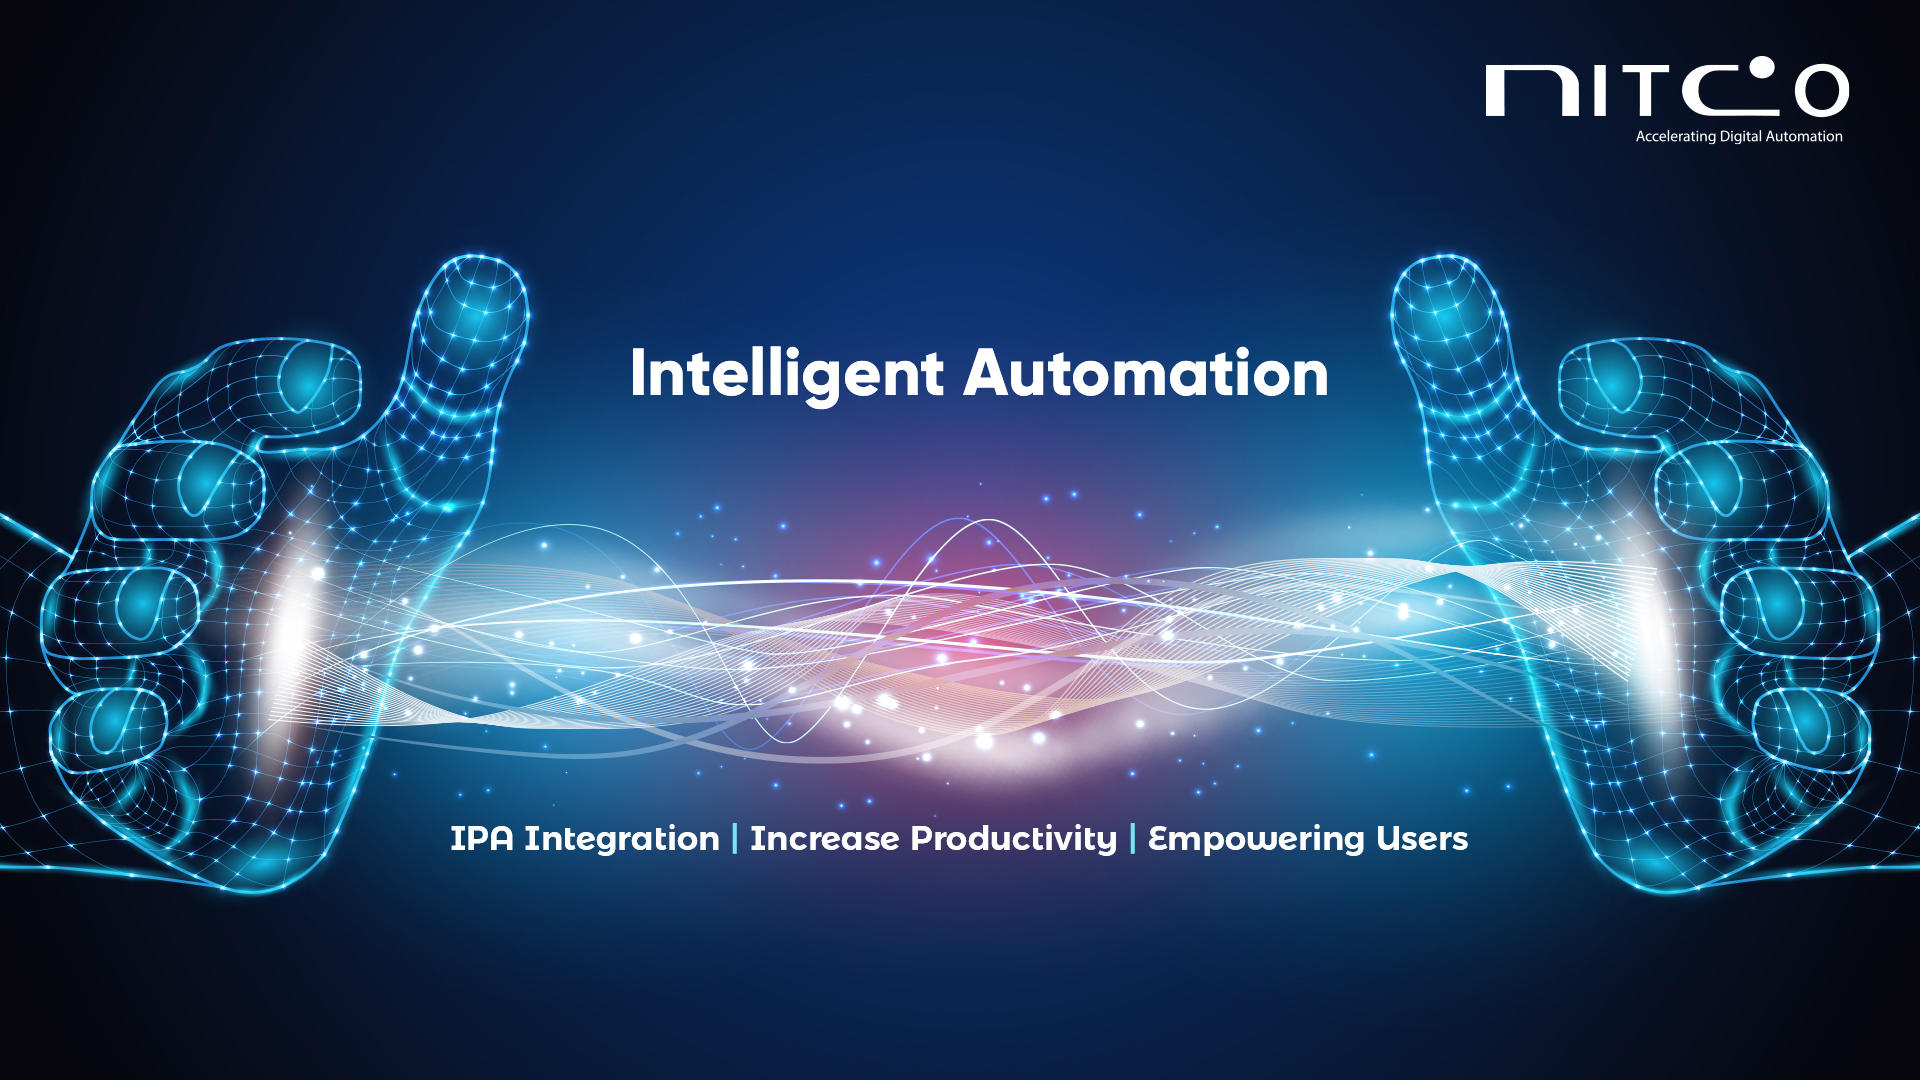 NITCO understands Intelligent Automation